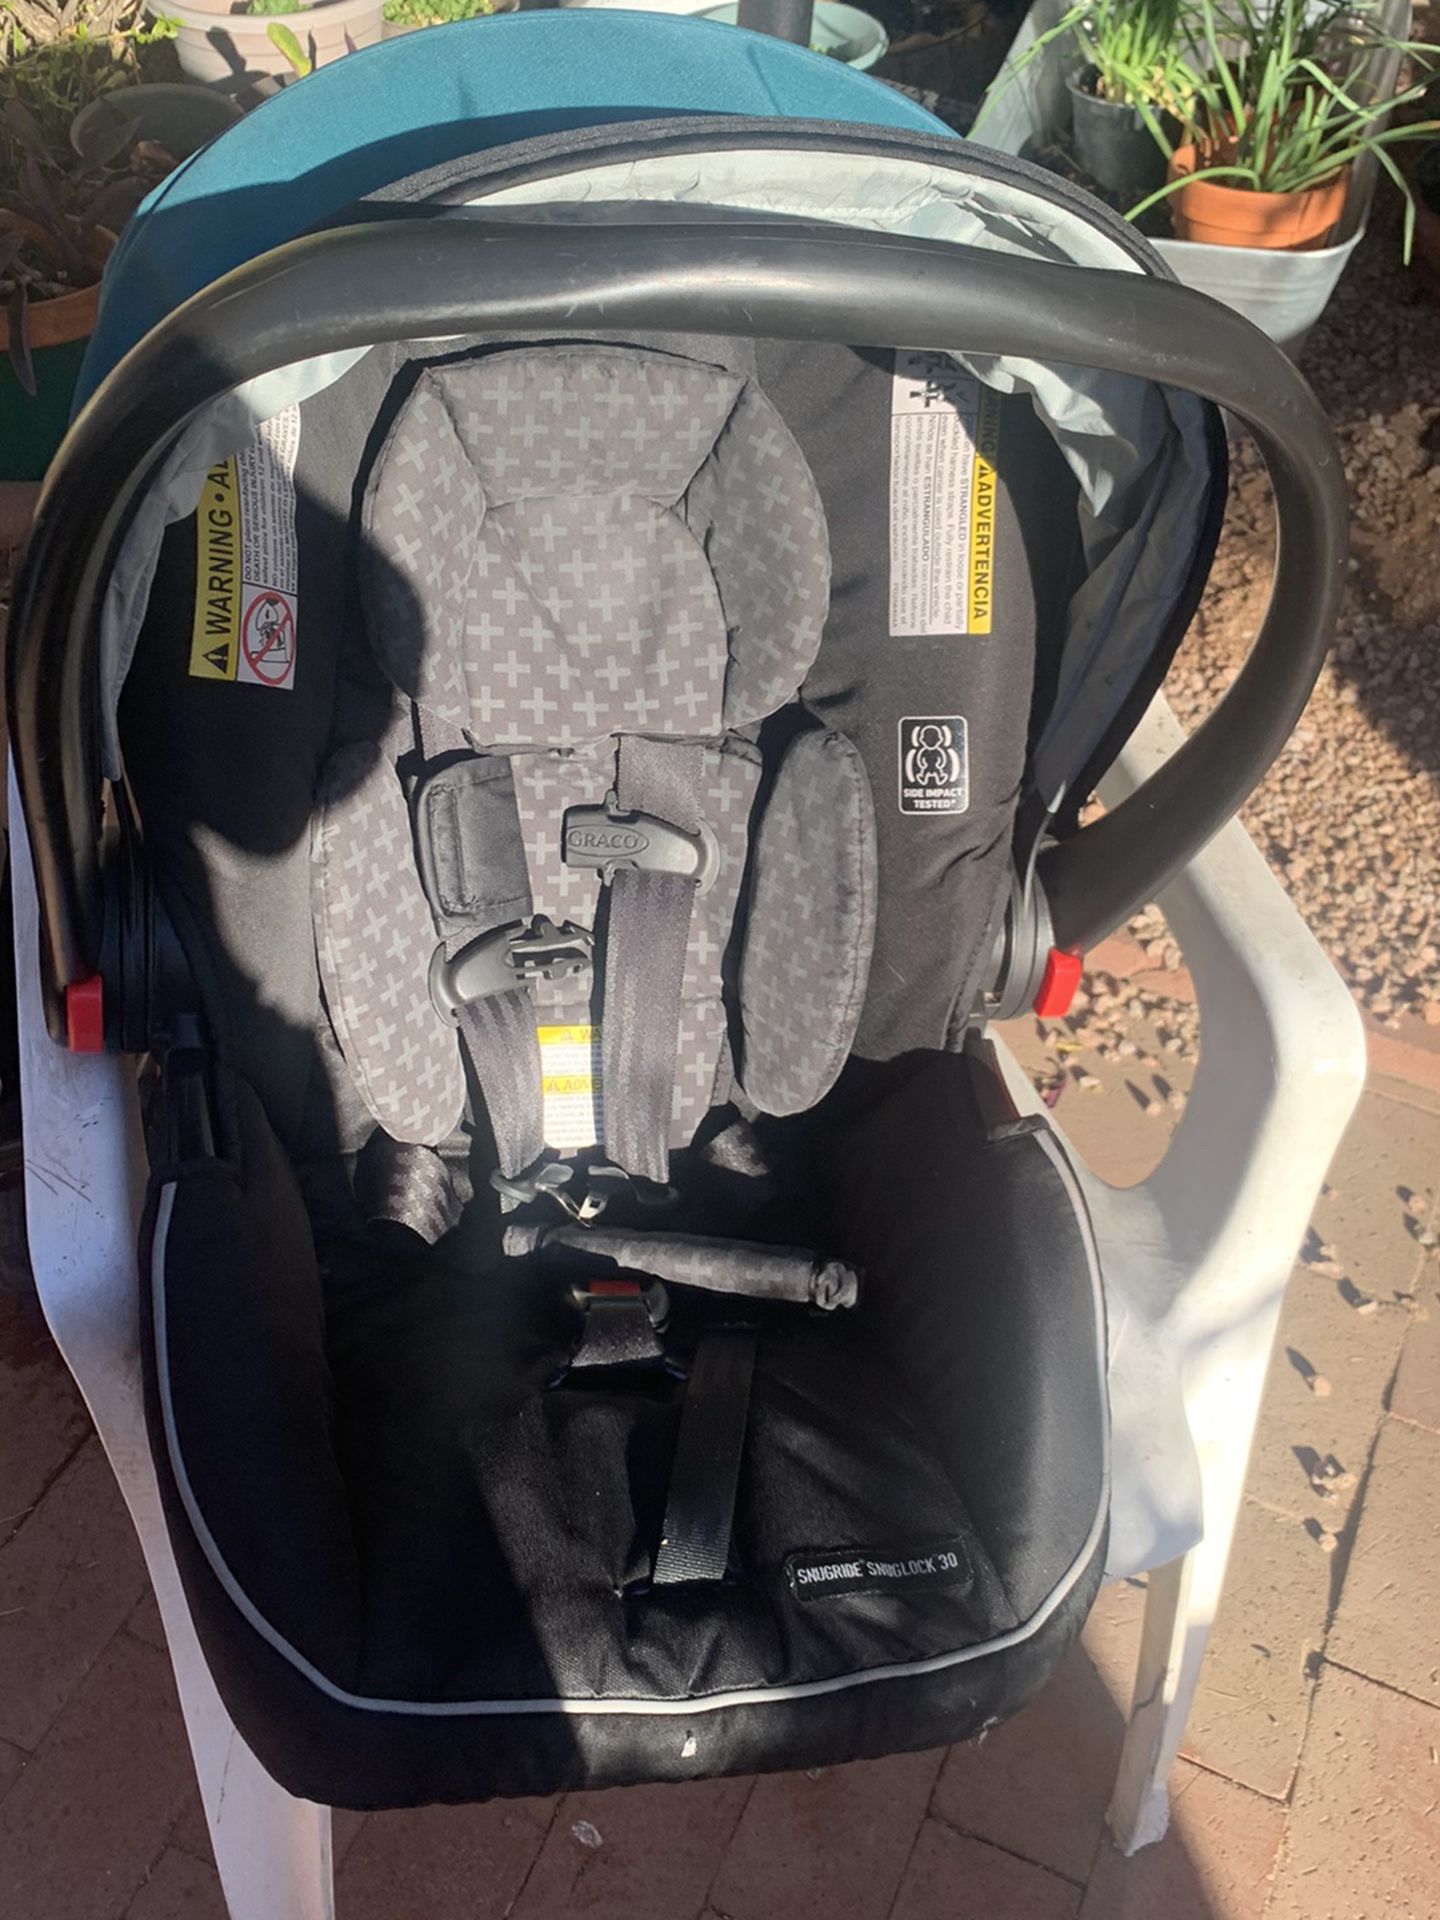 SnugRide SnugLock 30 Infant Car Seat